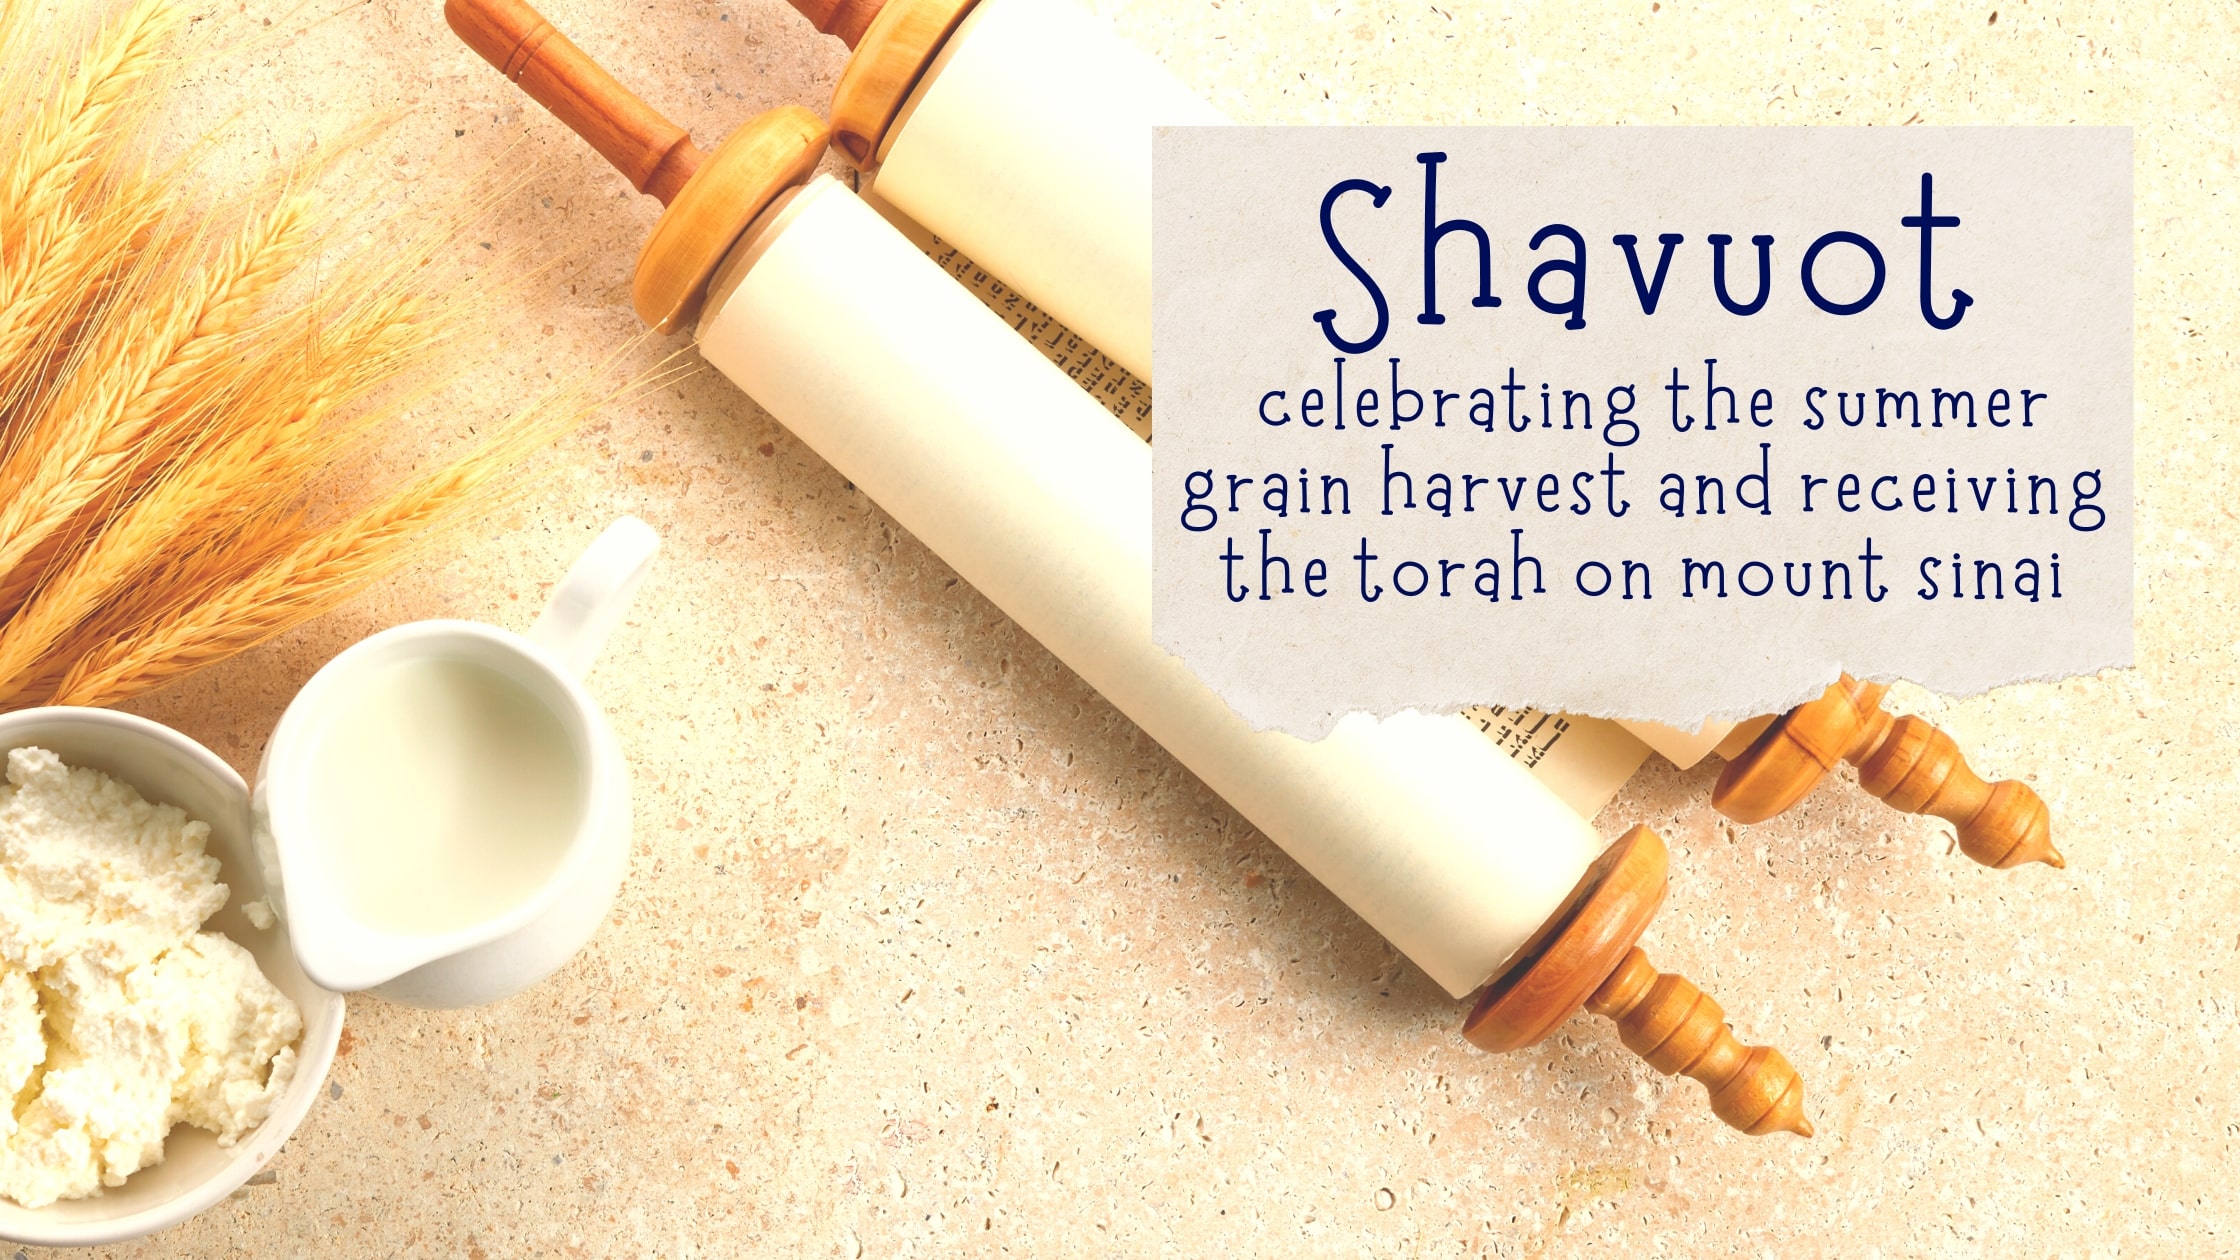 Shavuot, jewish holiday, celebrating summer grain, receiving the Torah, receiving the Torah on mt. sanai, Shavuot cheese,